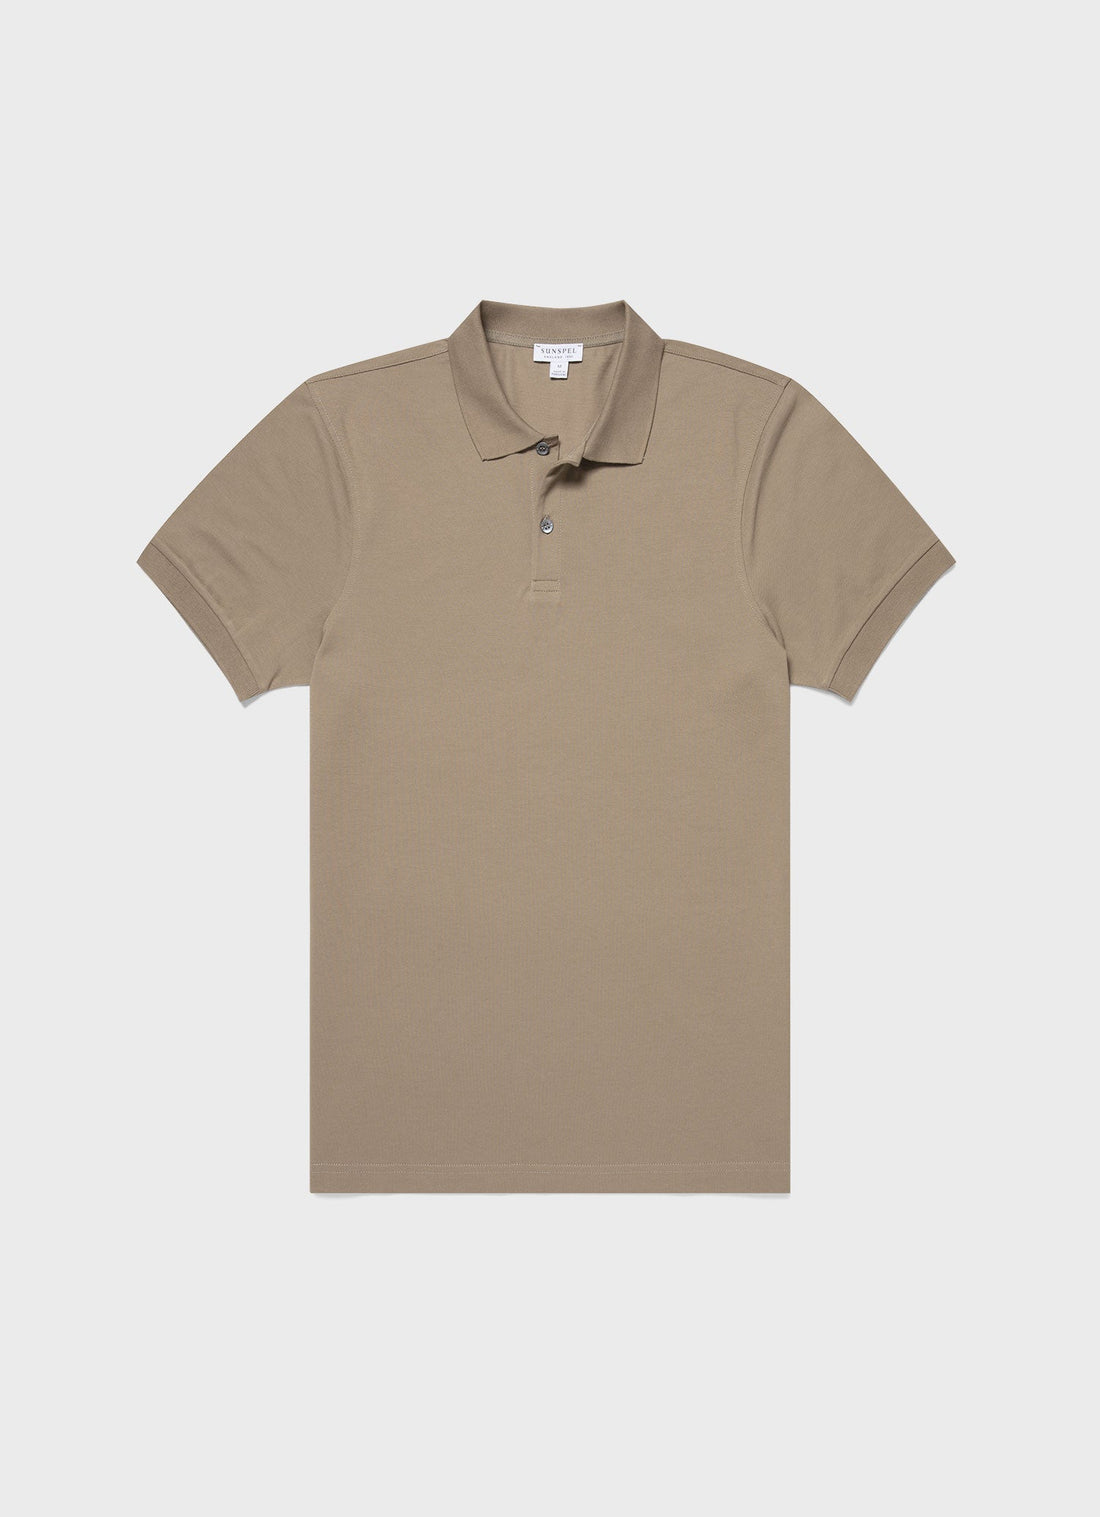 eczipvz Summer Shirts for Men Men's Cotton Pique Polo Shirts